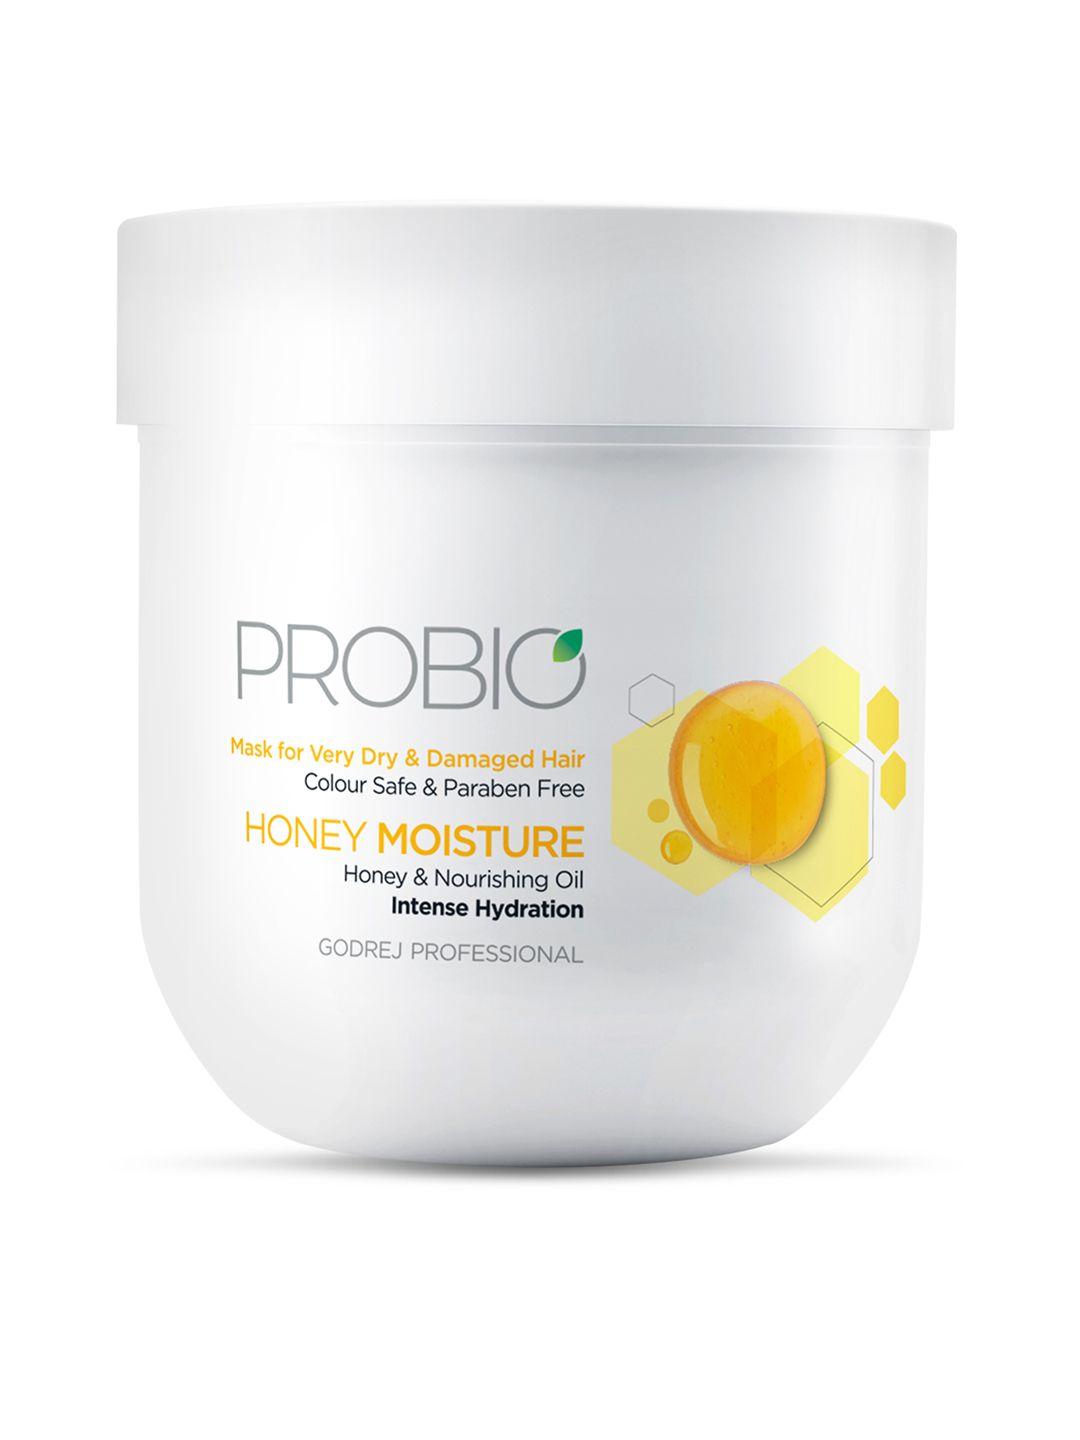 godrej professional probio honey moisture mask for intense hydration - 200 g